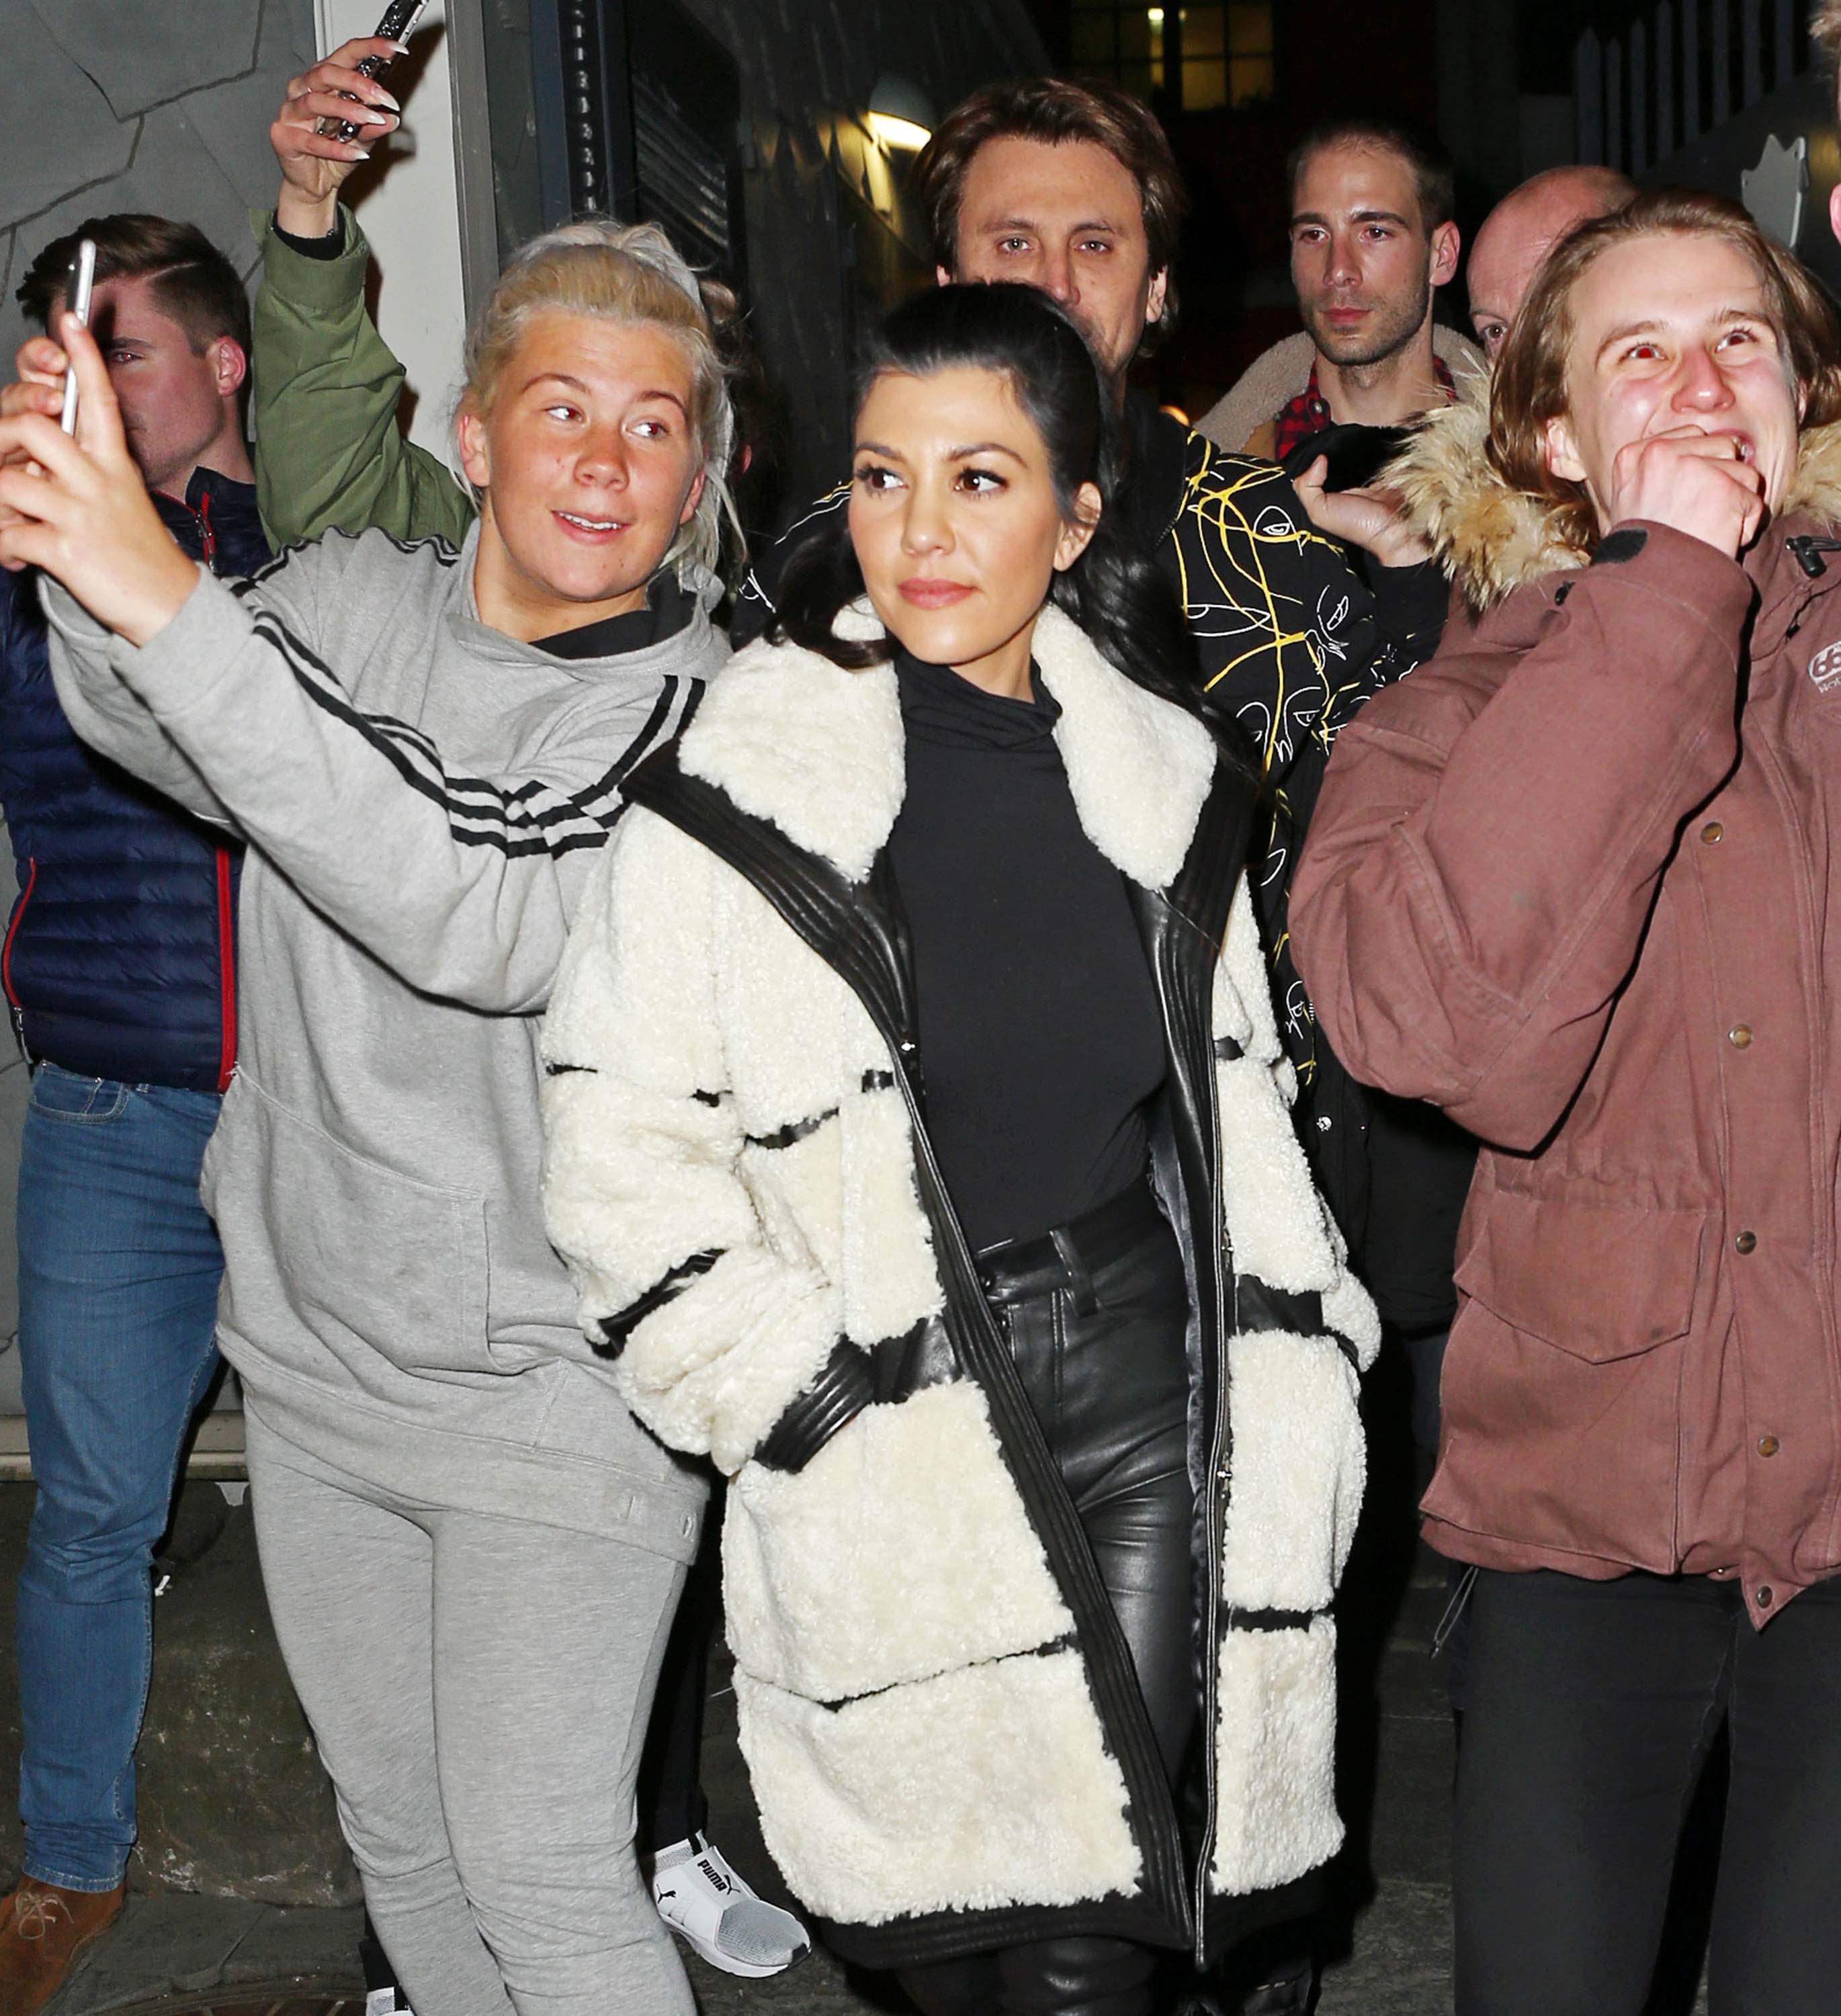 Kourtney Kardashian leaving a restaurant in Iceland